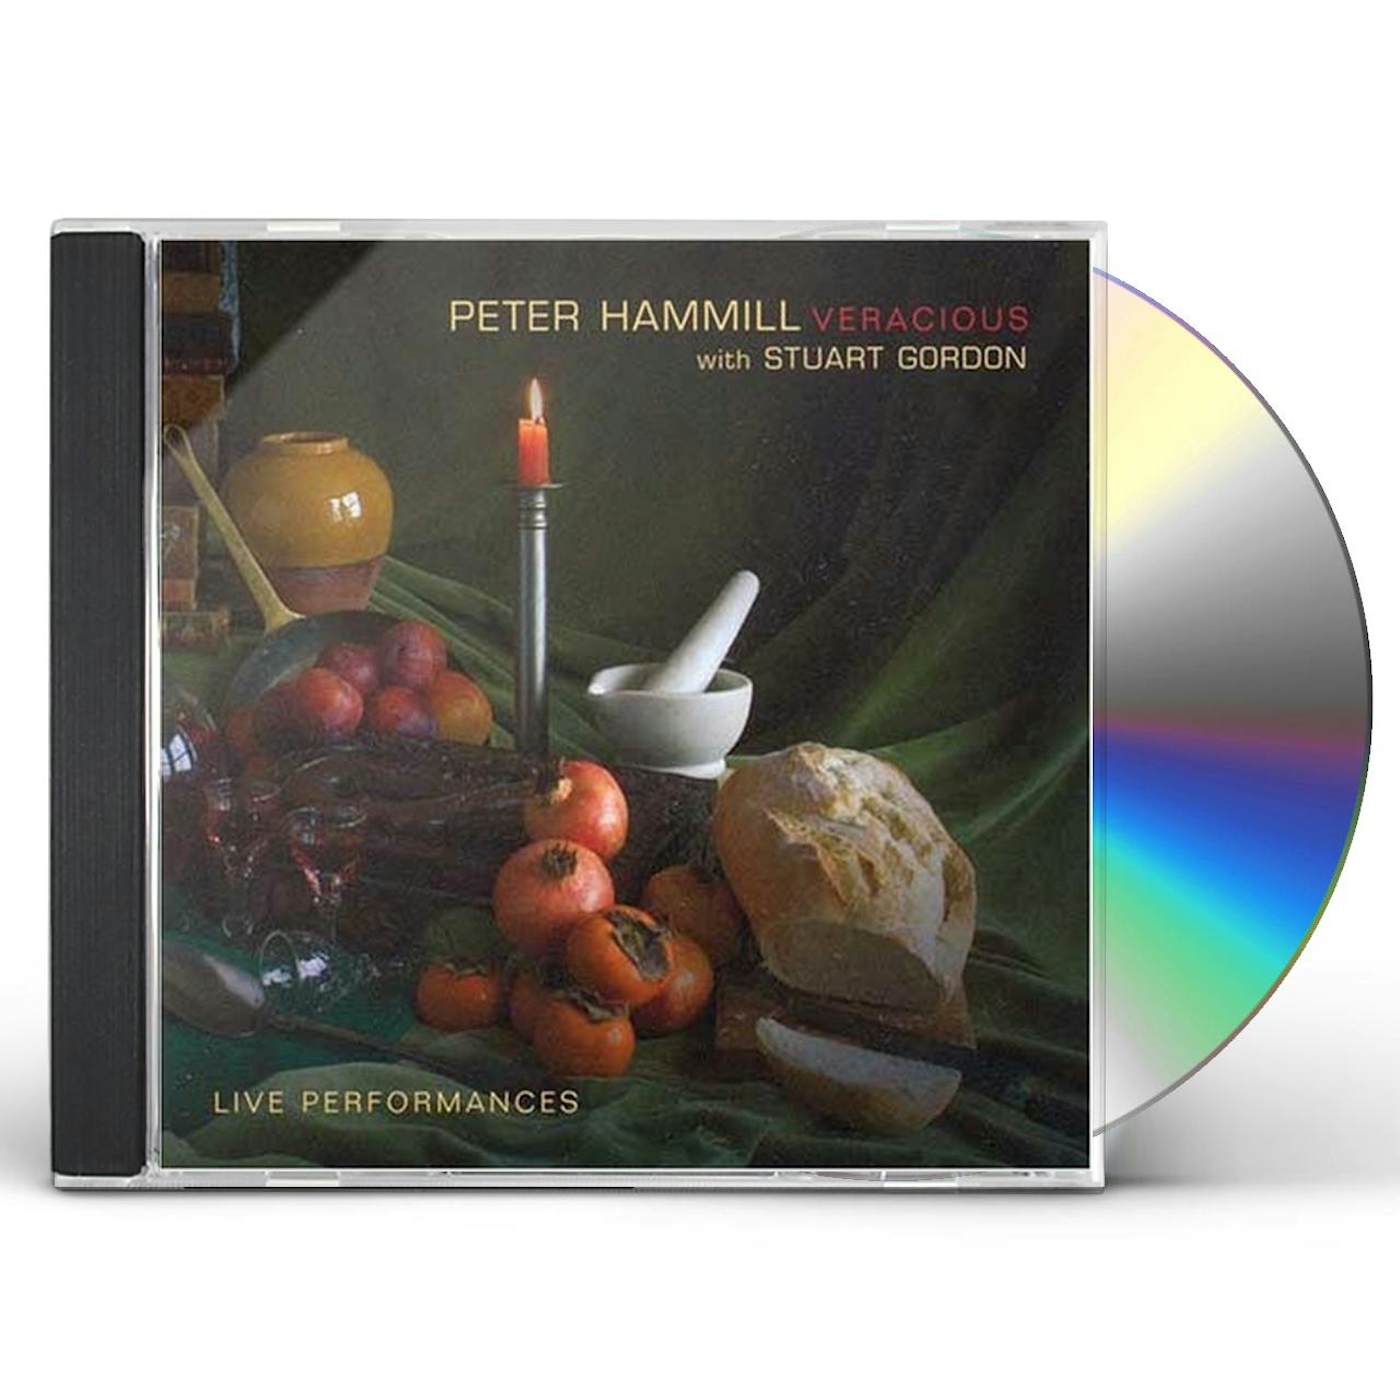 Peter Hammill VERACIOUS CD